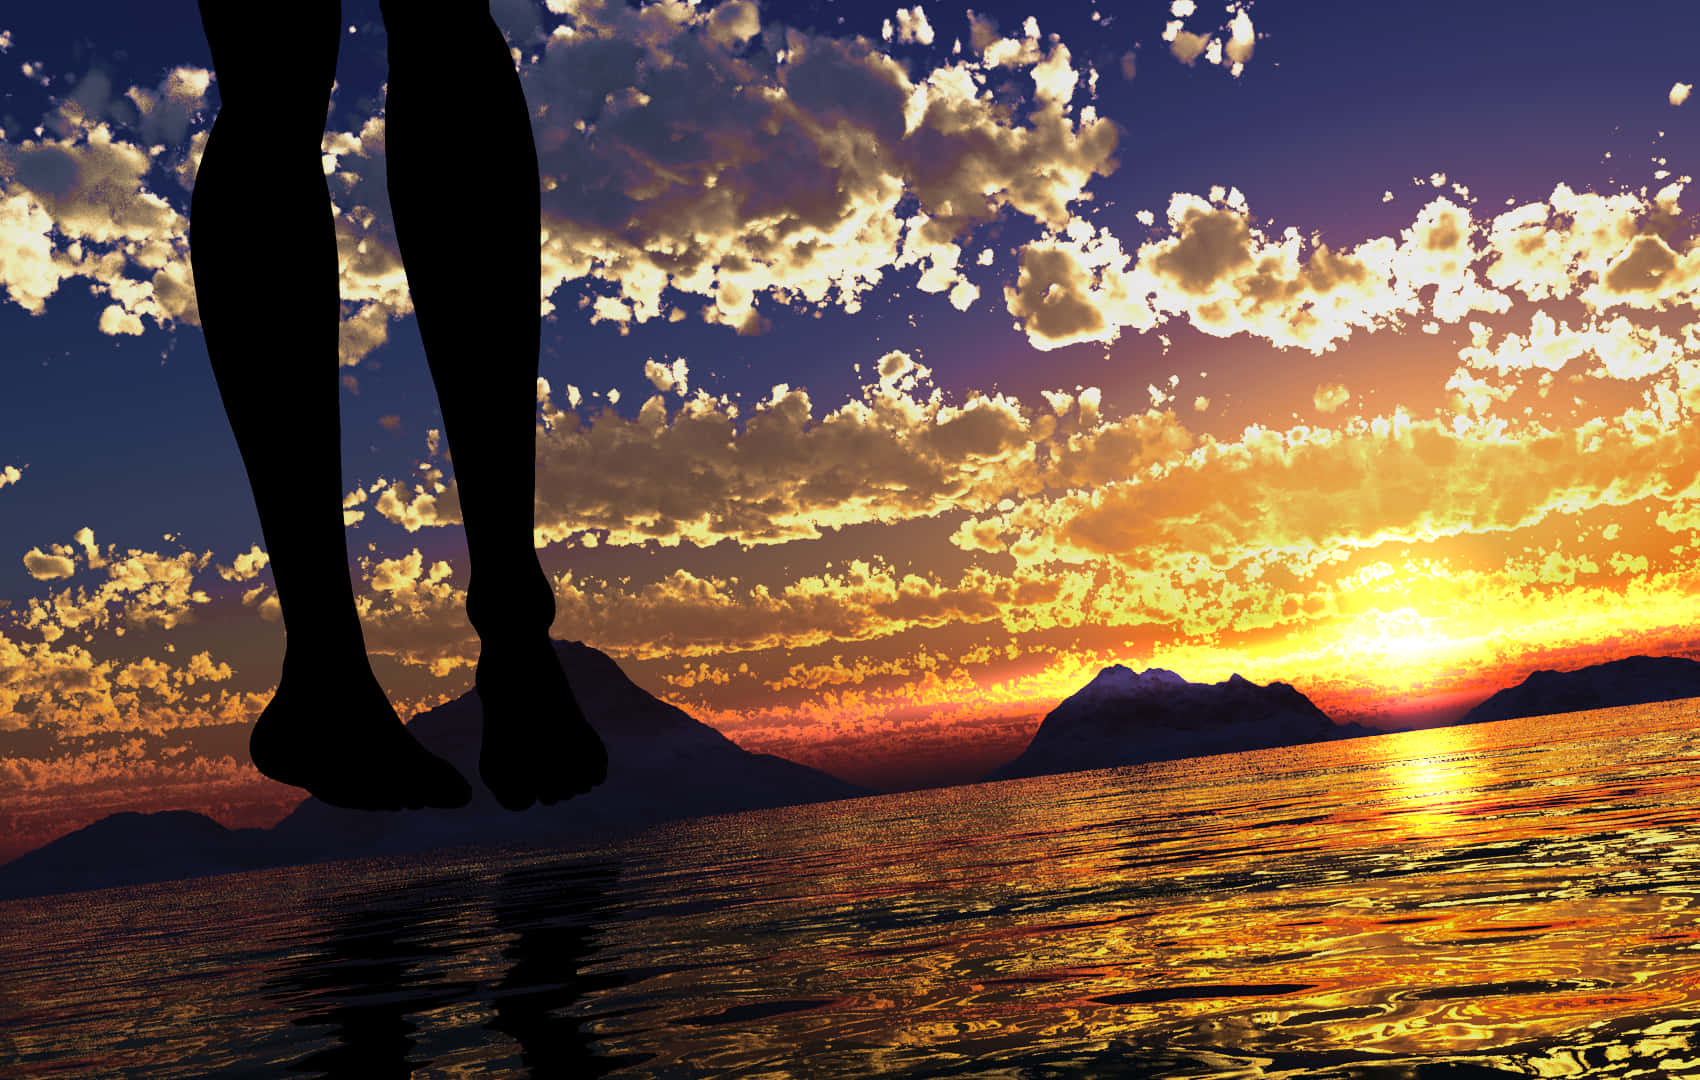 Sunset Silhouette Legs Over Water Wallpaper